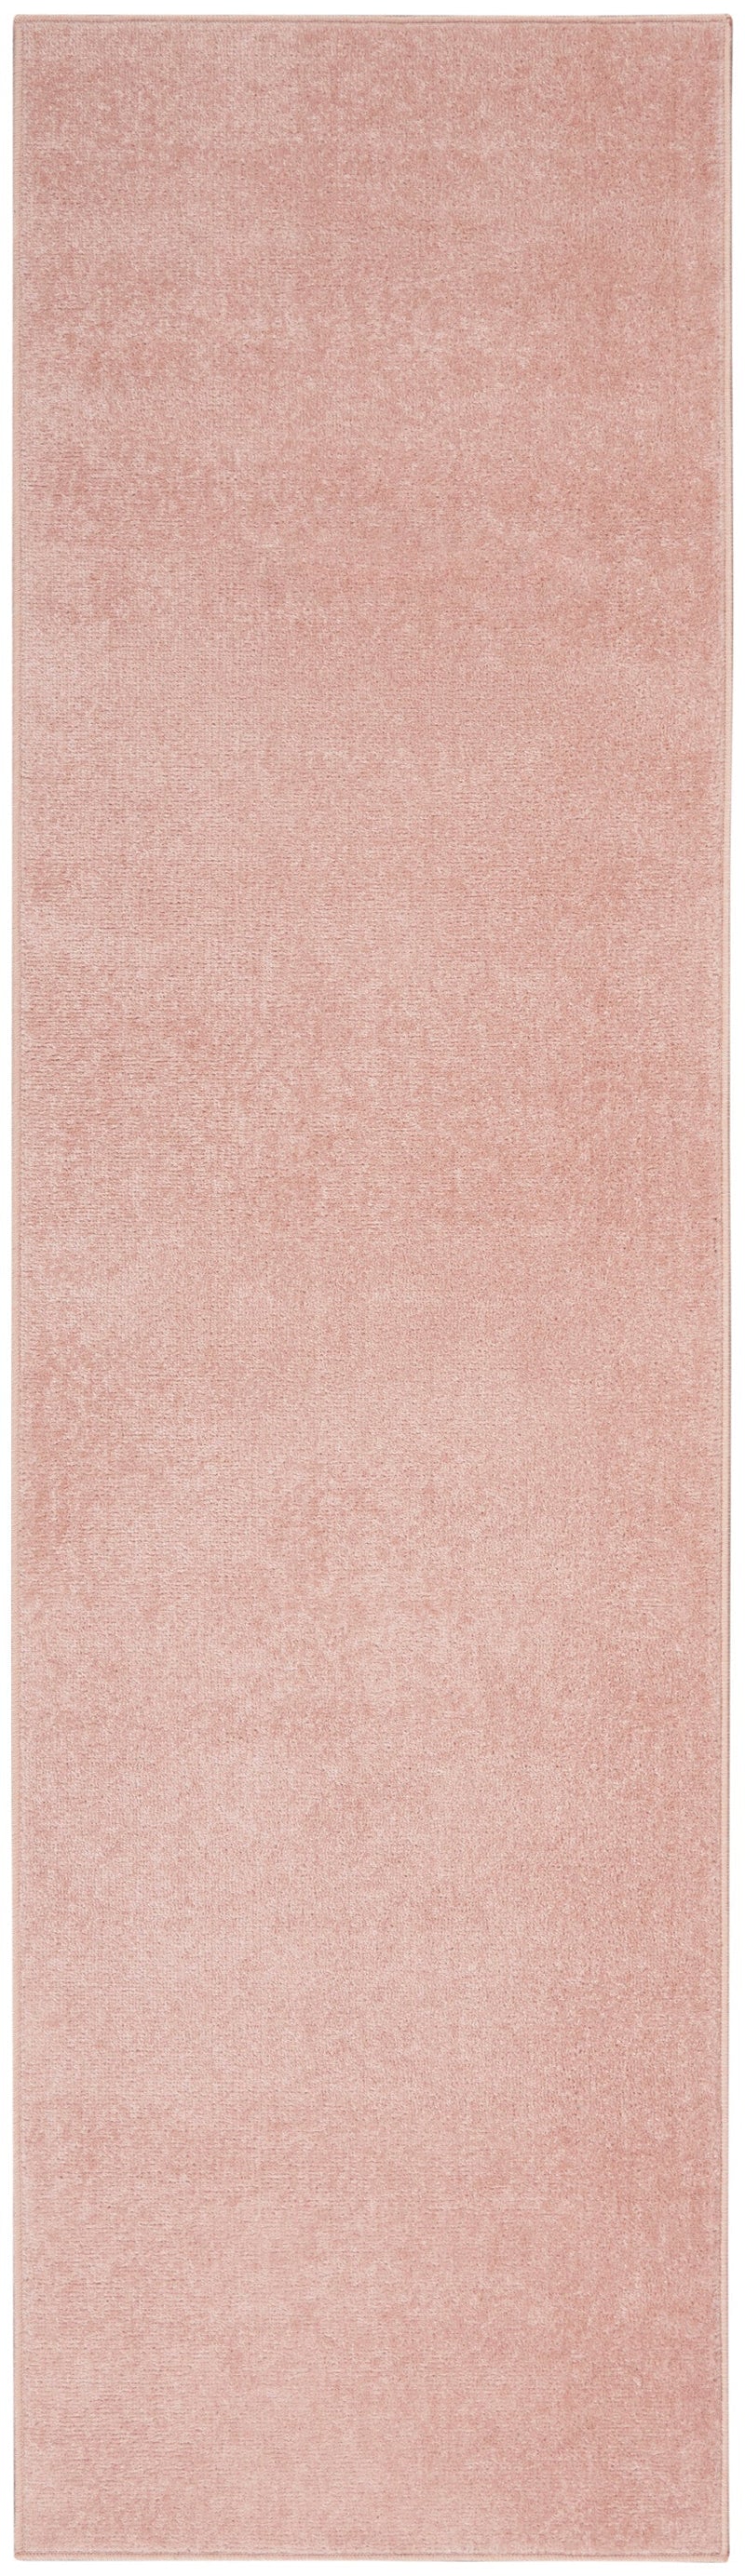 media image for nourison essentials pink rug by nourison 99446824776 redo 4 233